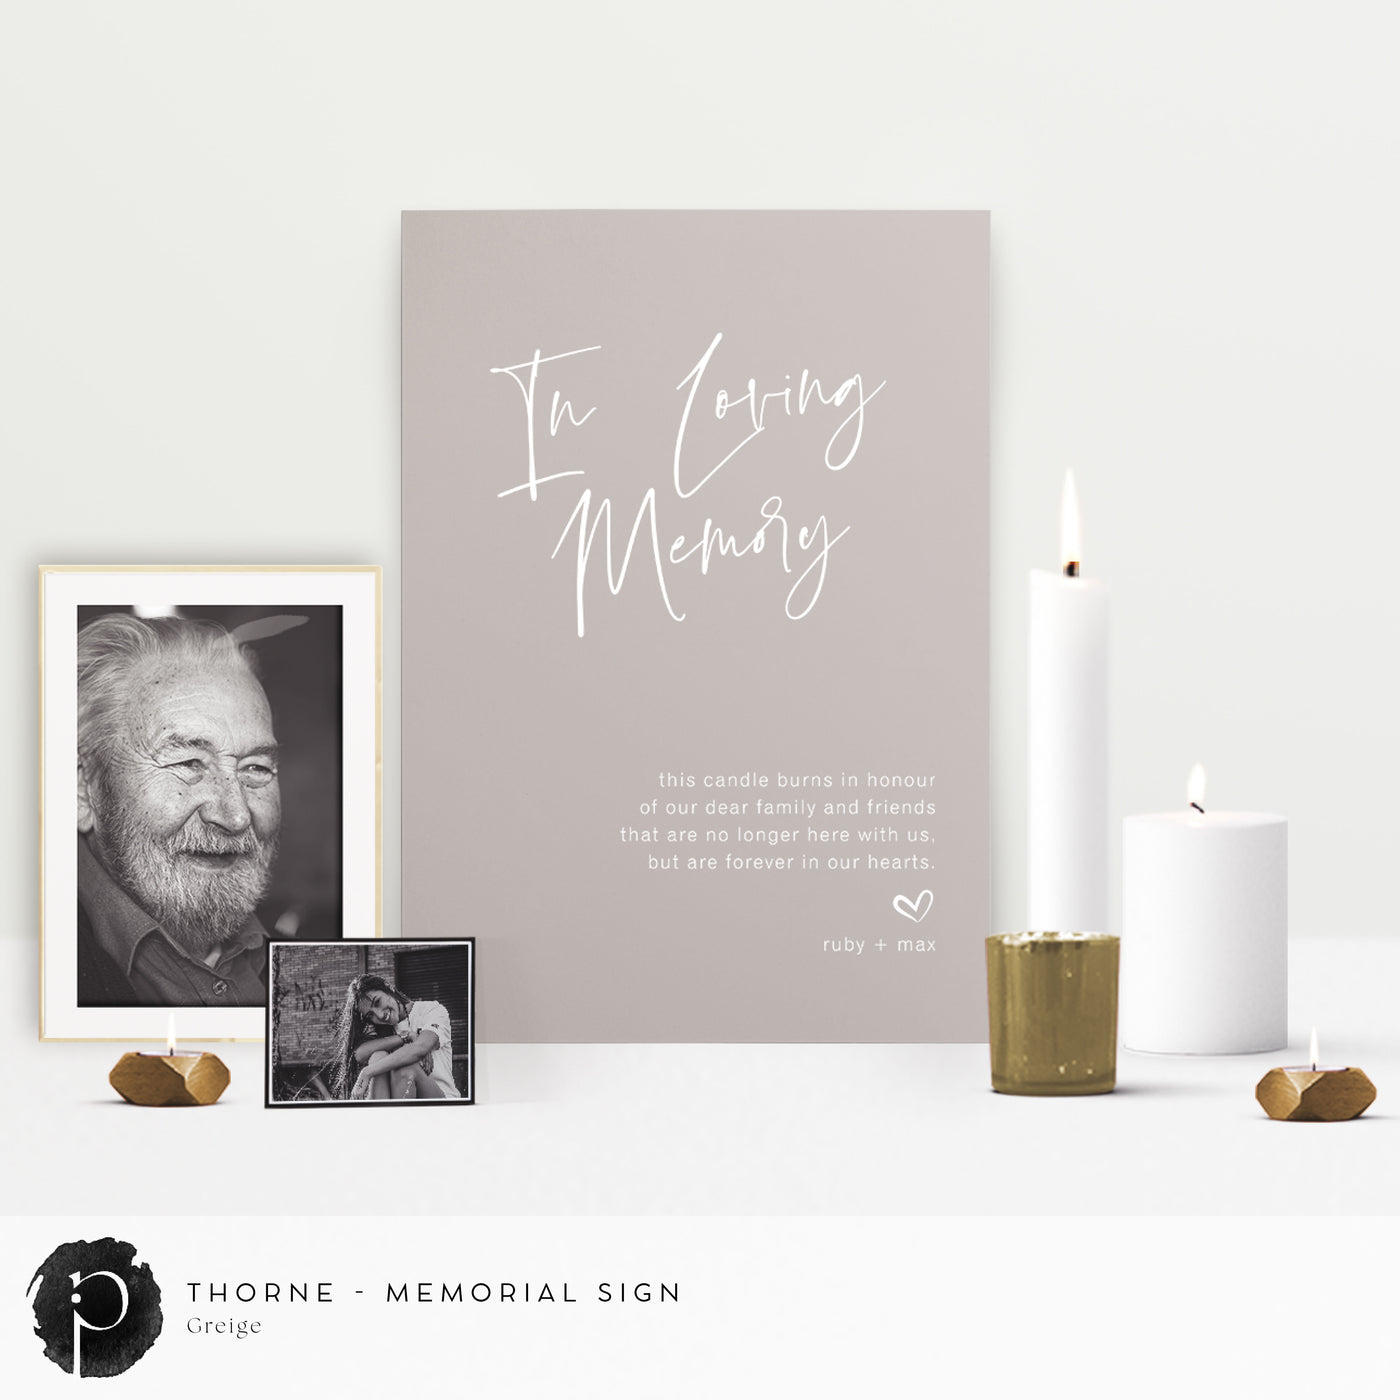 Thorne - In Loving Memory Memorial Sign